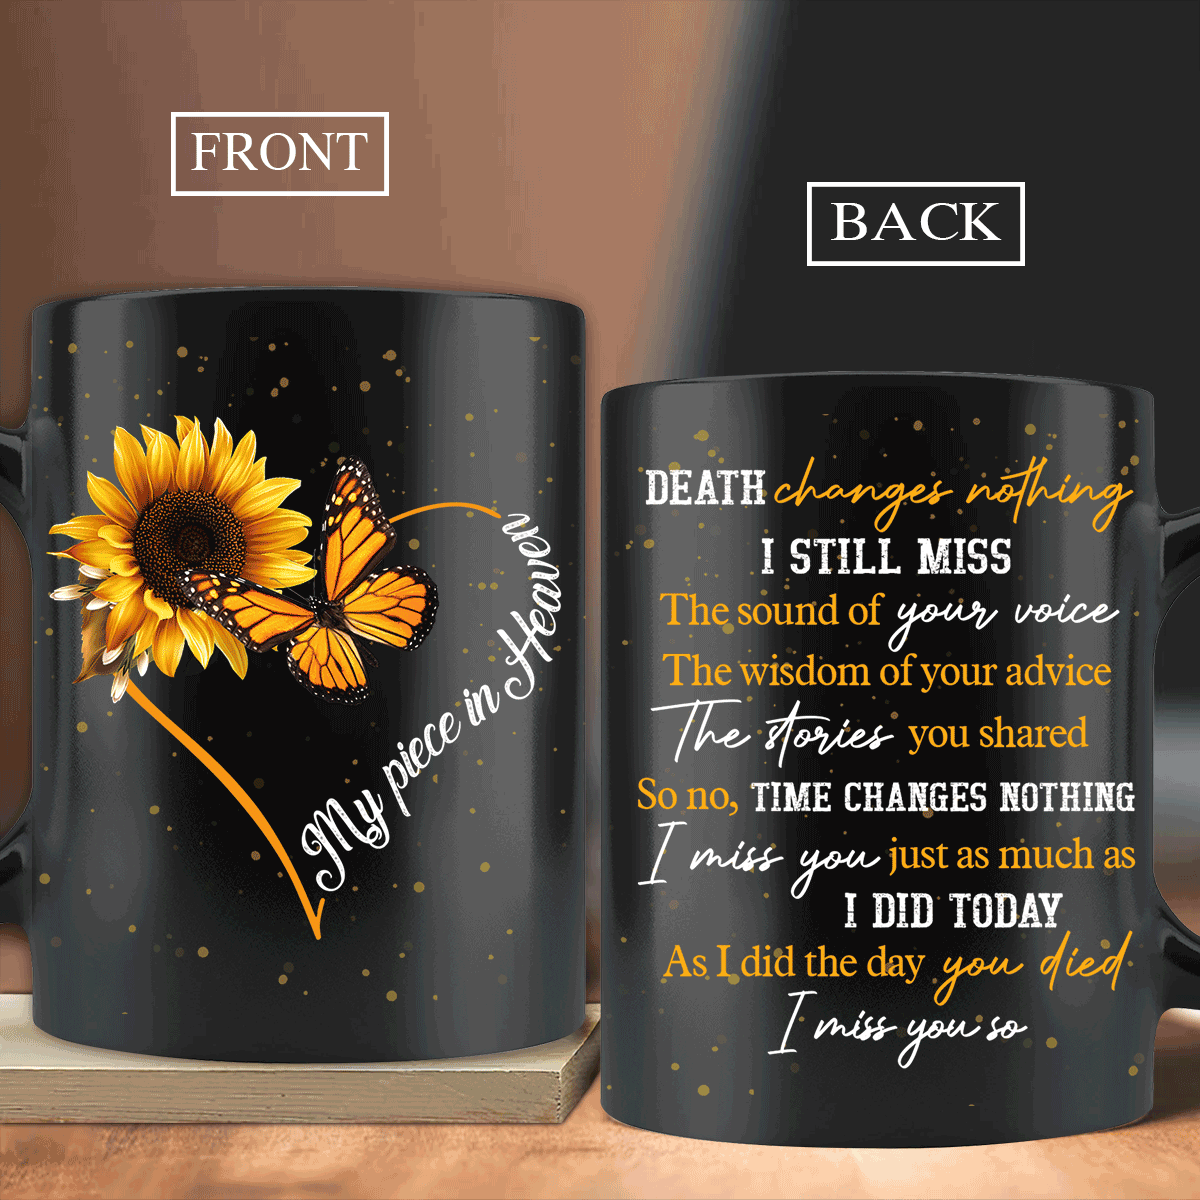 Memorial Black Mug - Sunflower painting, Orange butterfly, Stars in the sky - Gift for members family - My piece in heaven - Heaven Black Mug.